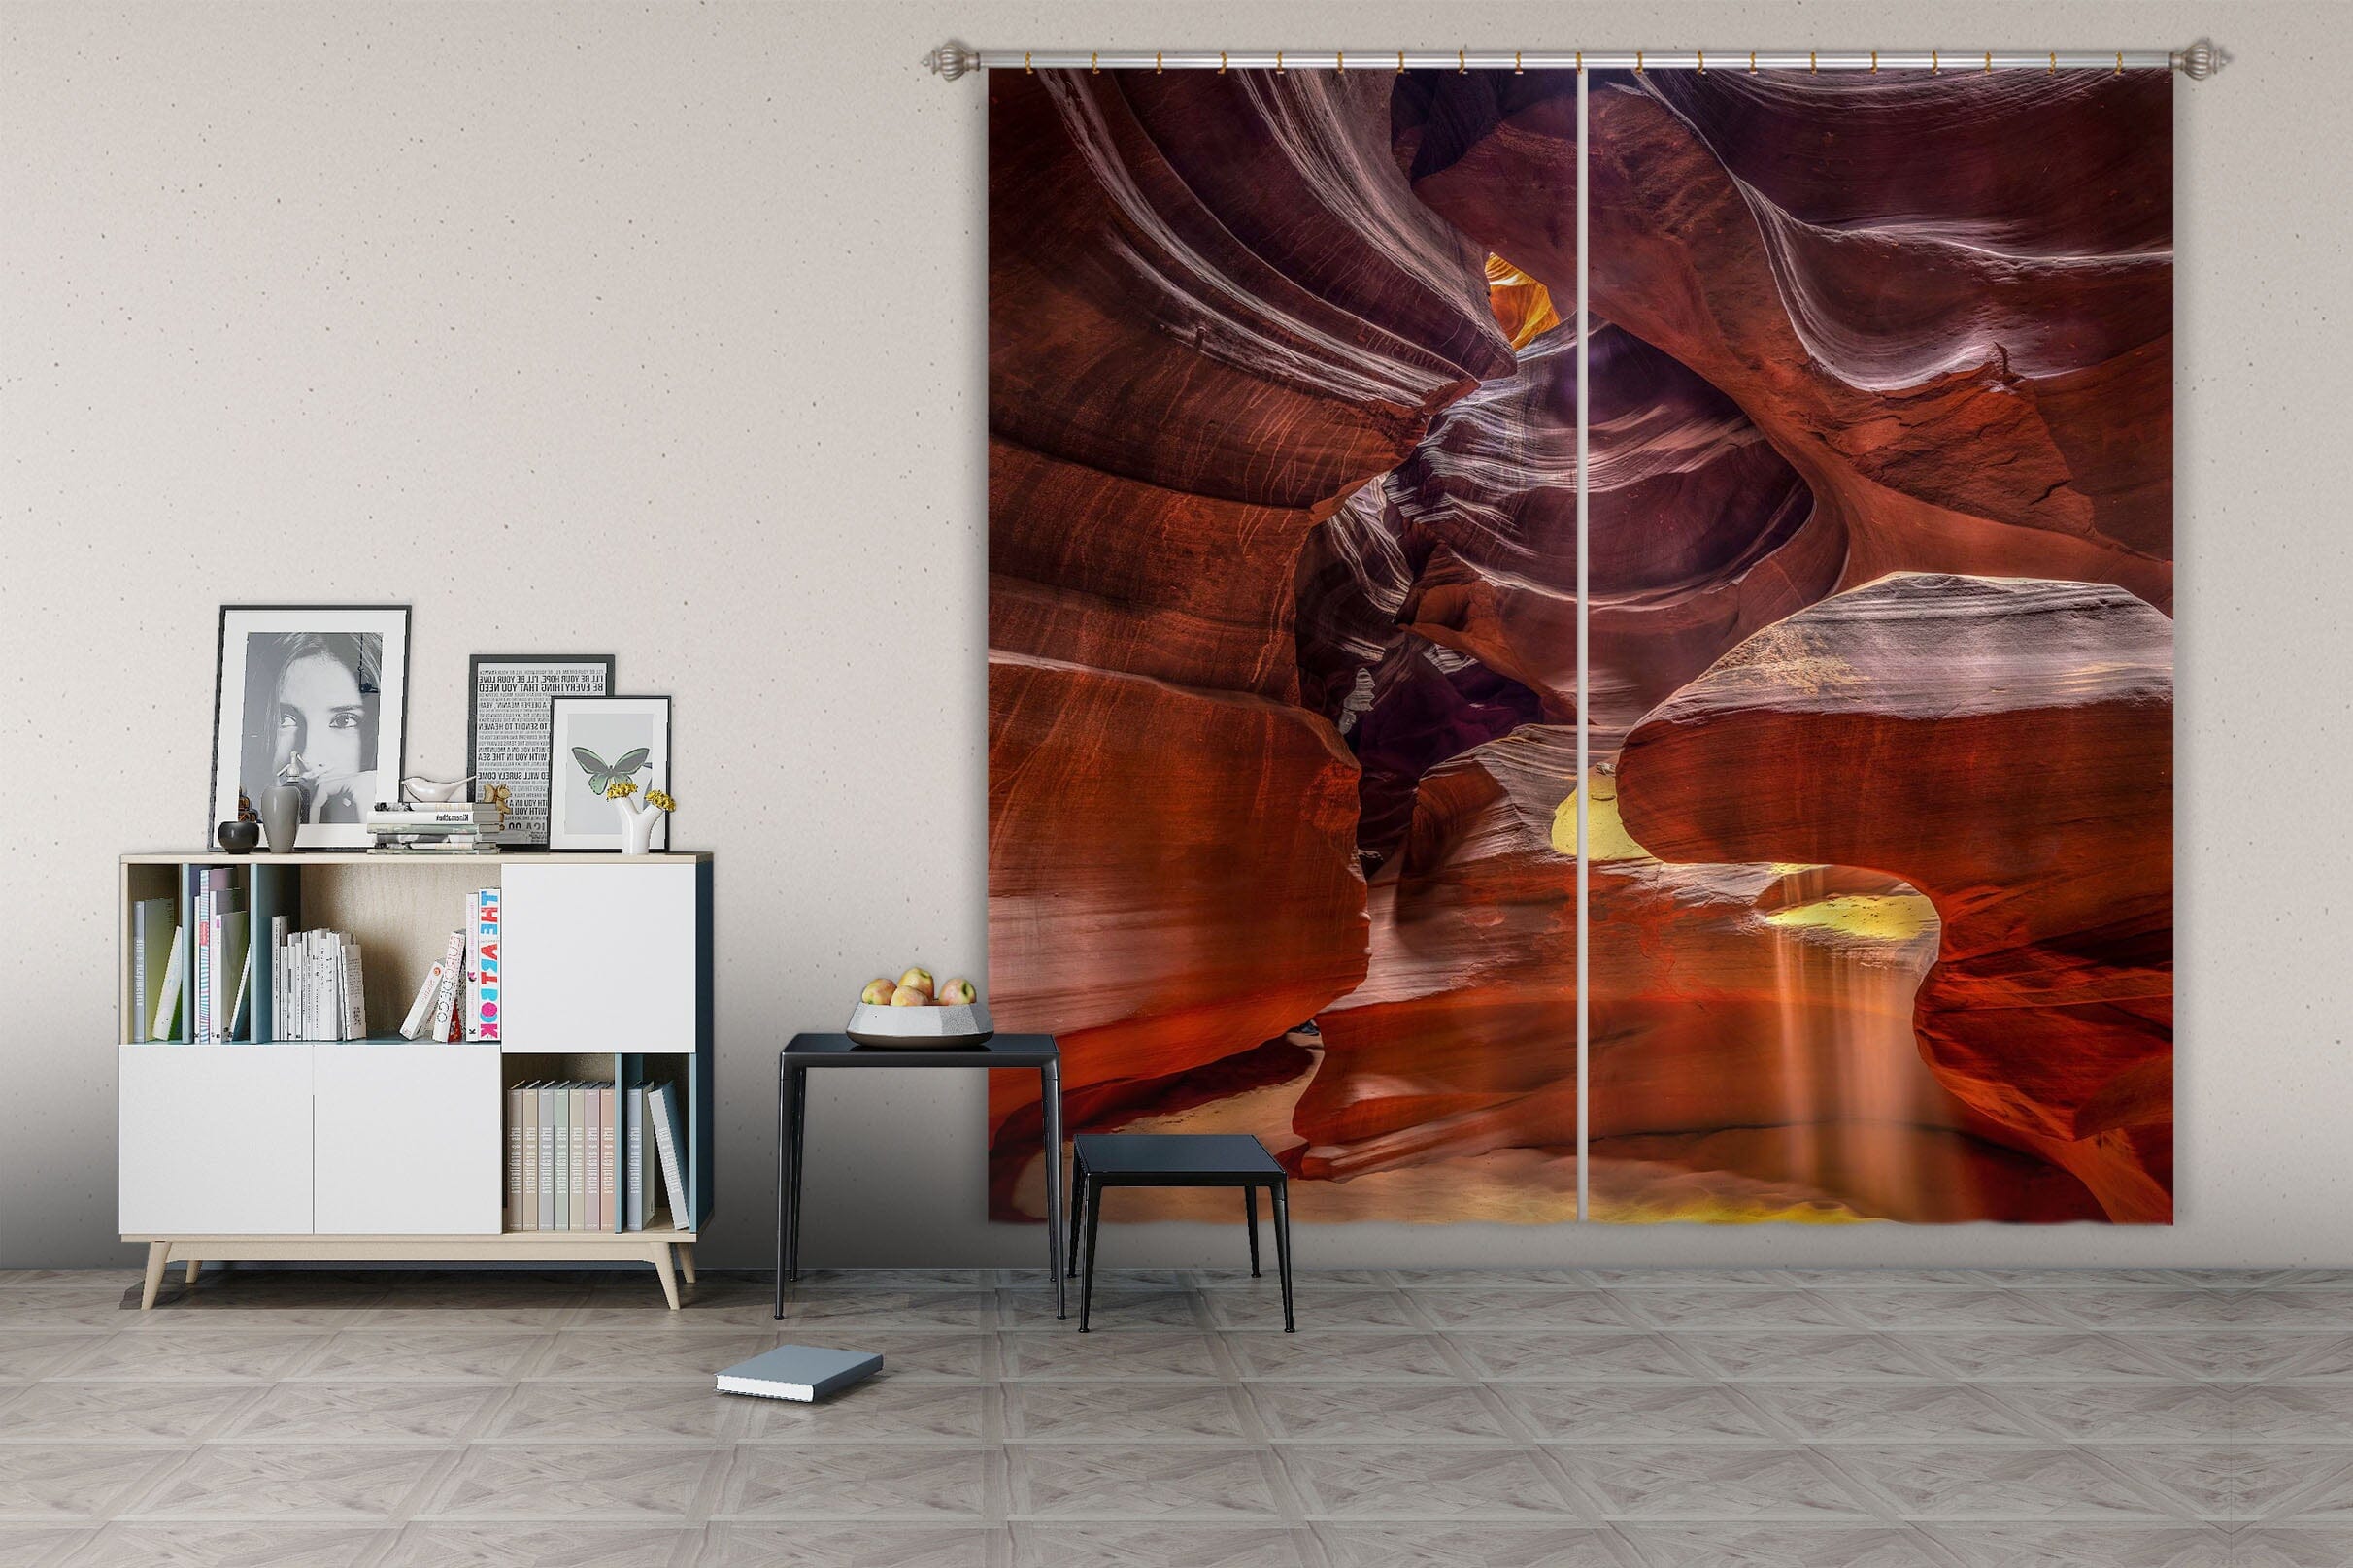 3D Gold Sand 070 Marco Carmassi Curtain Curtains Drapes Curtains AJ Creativity Home 